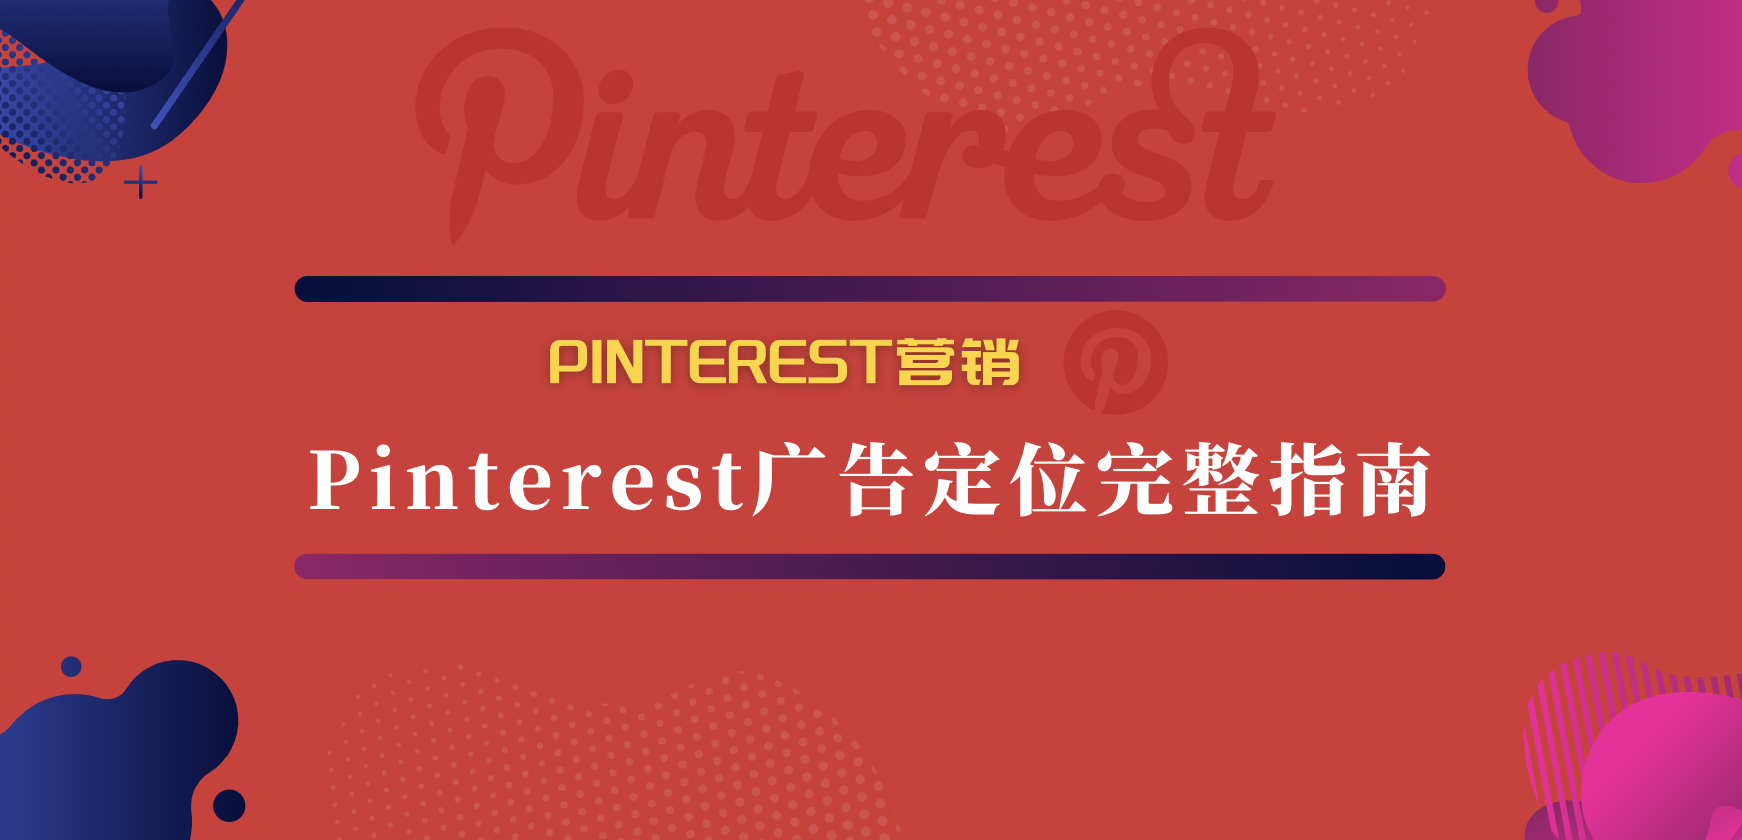 Pinterest营销｜Pinterest广告定位完整指南